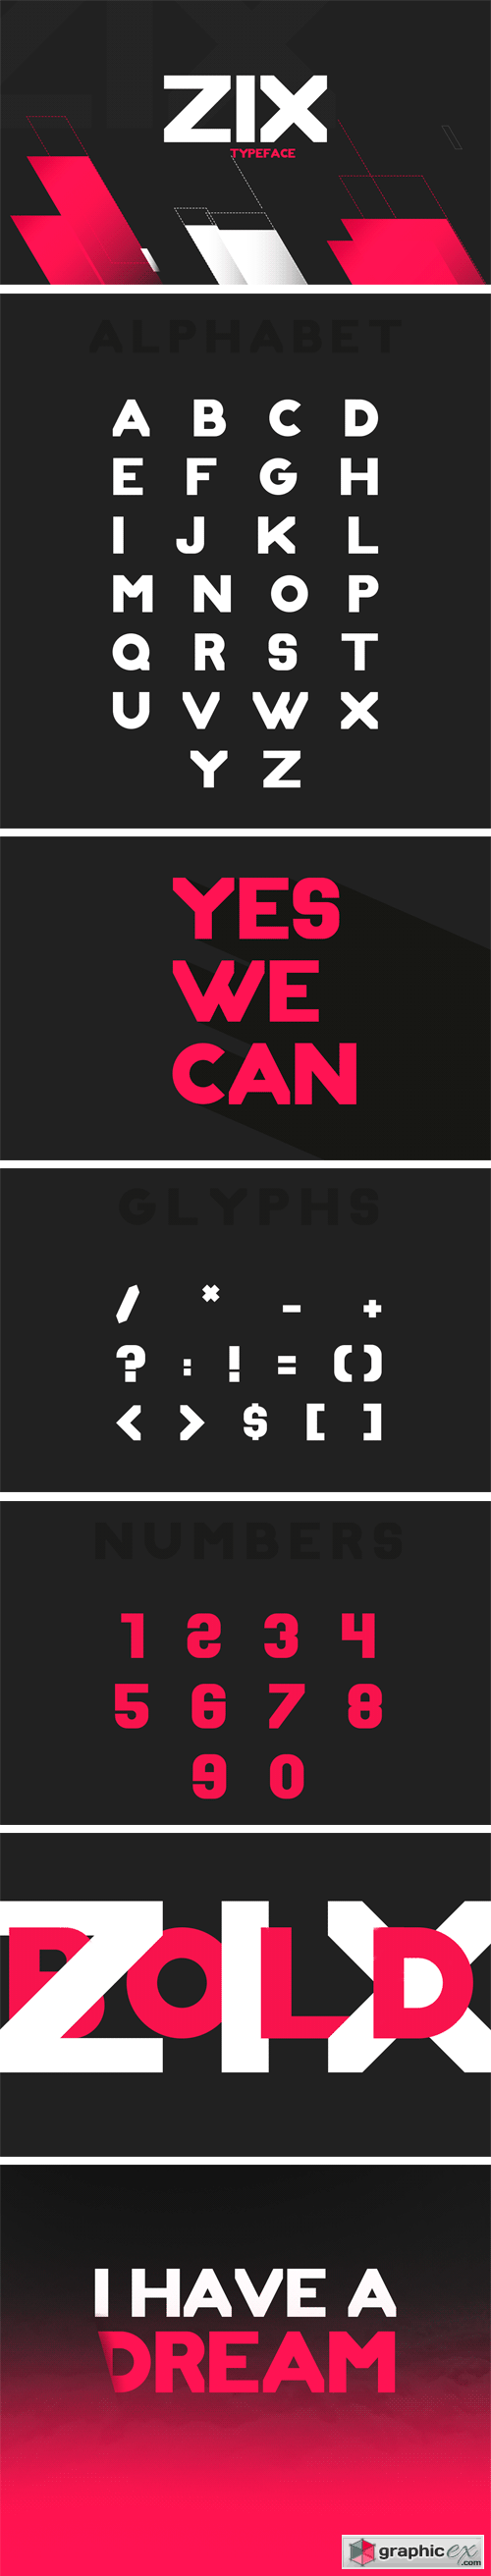 Zix Typeface